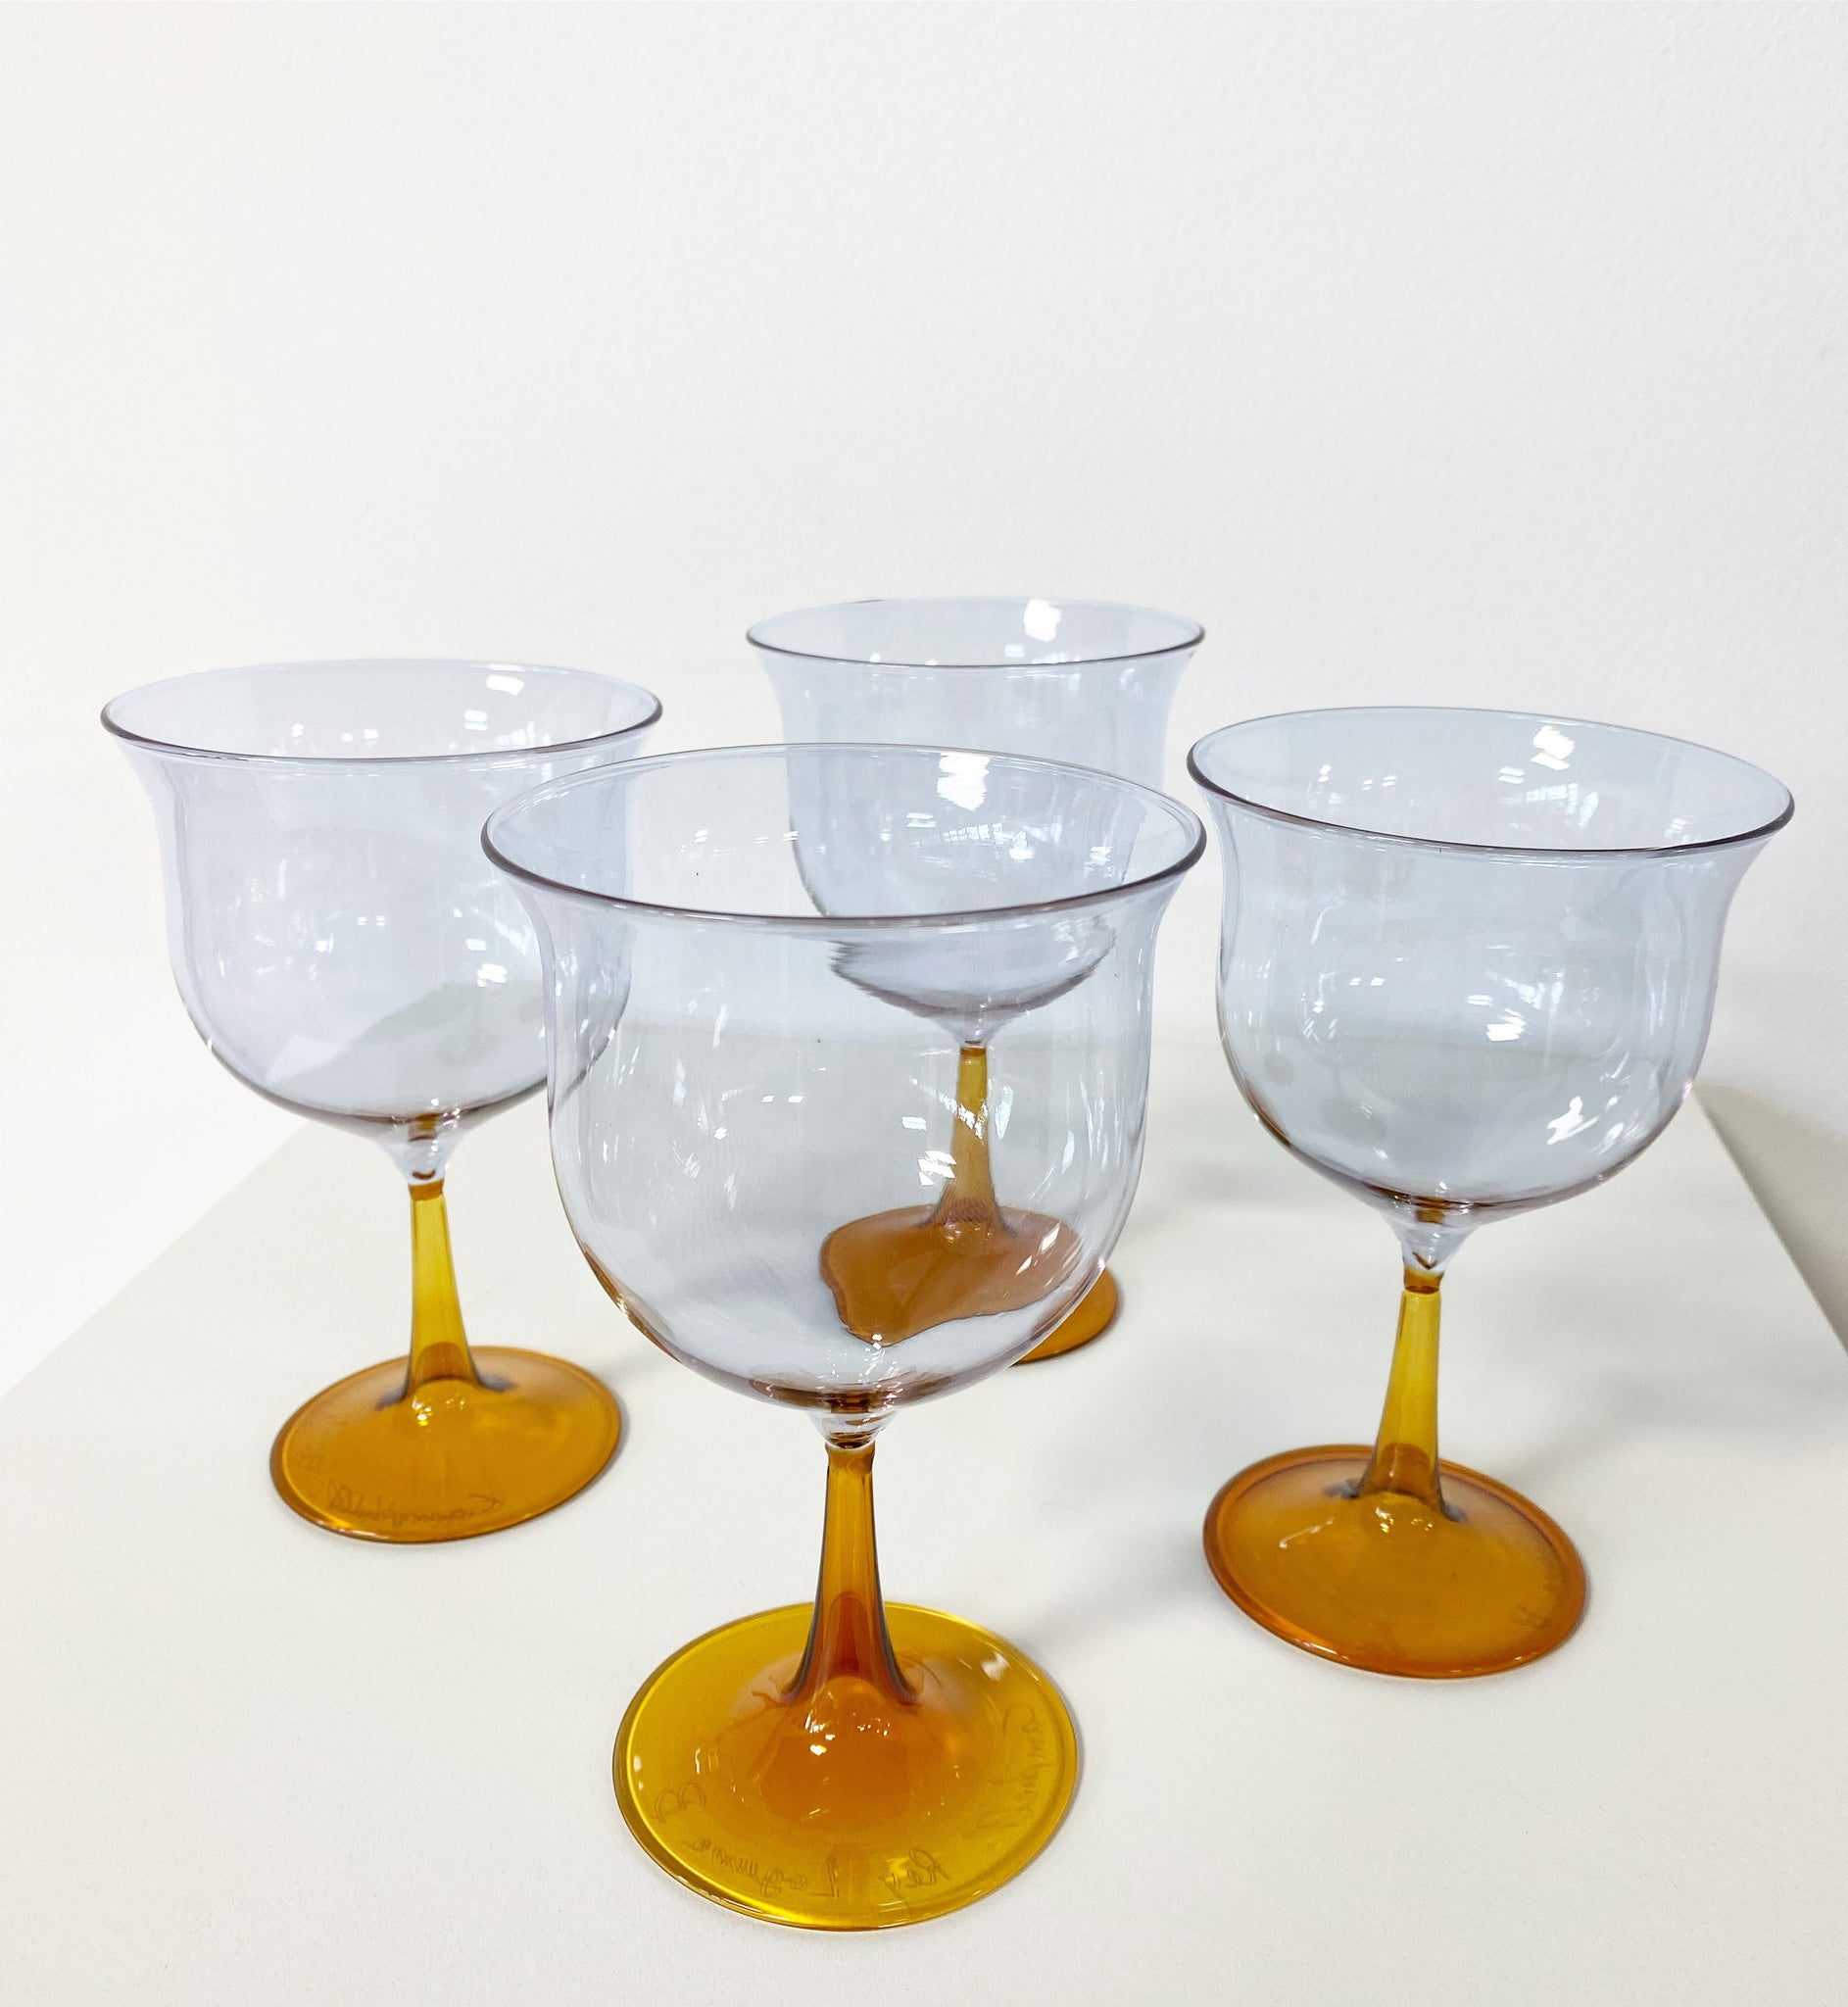 Cosimo Wine Glasses, Violet-Amber, set of 4